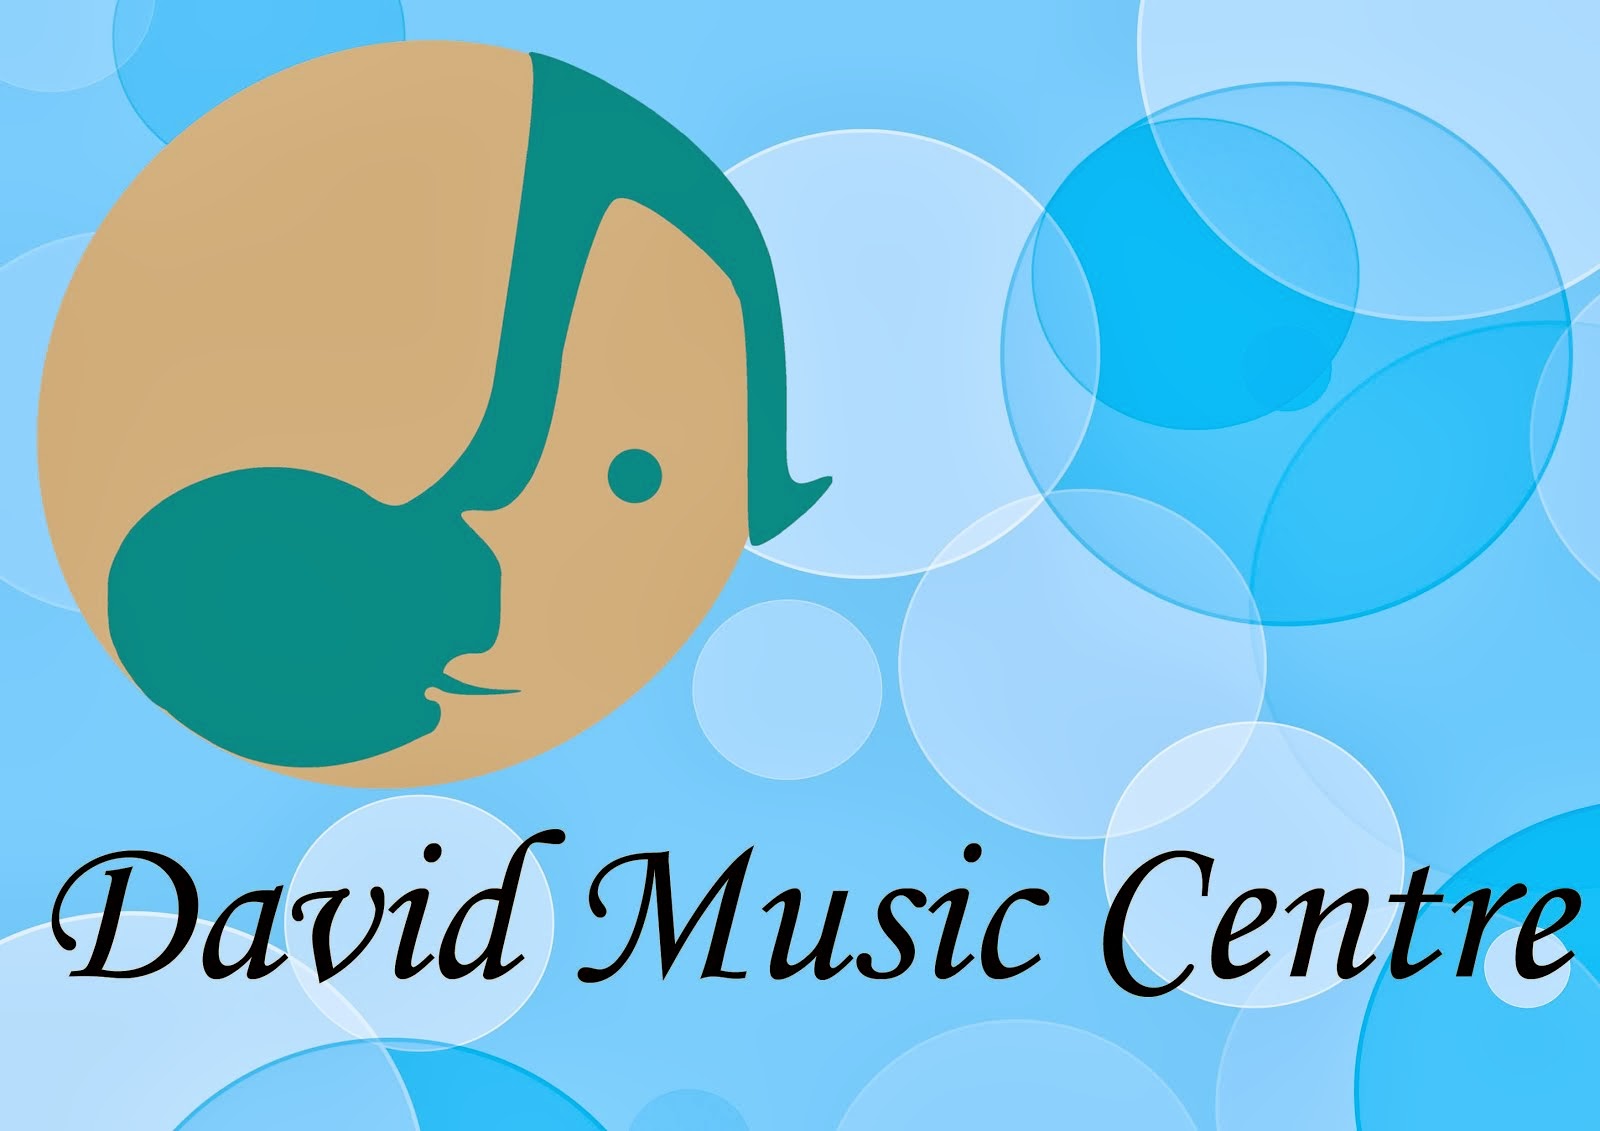 David Music Center